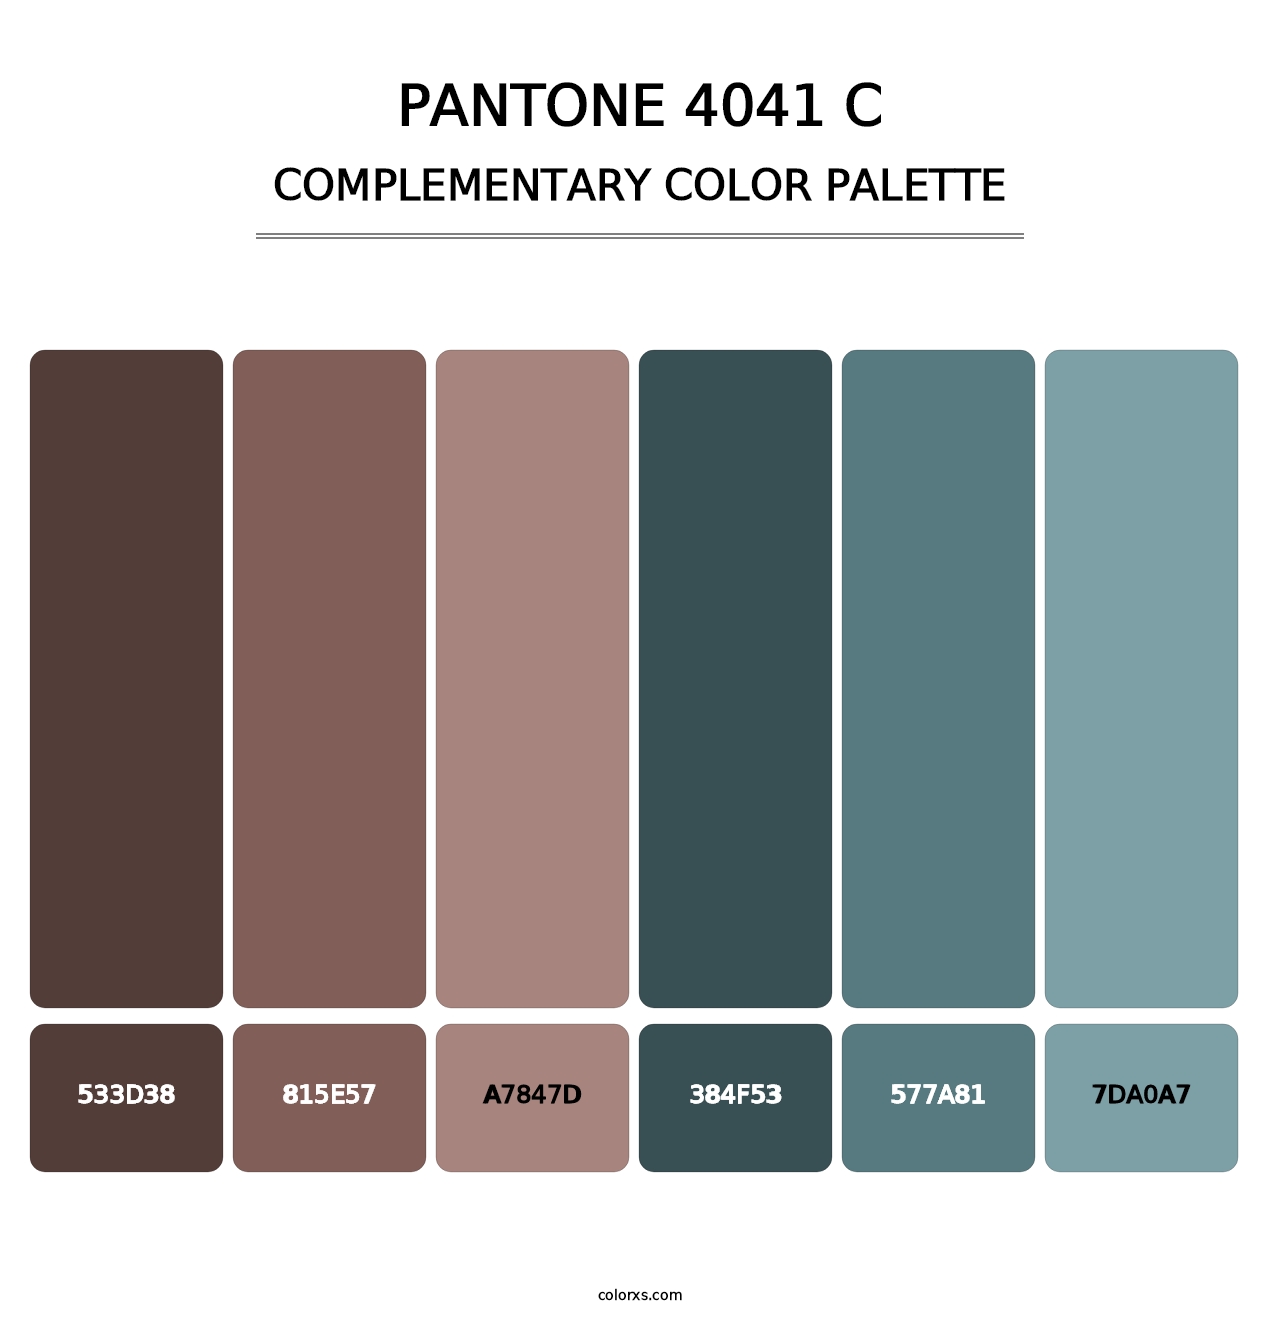 PANTONE 4041 C - Complementary Color Palette